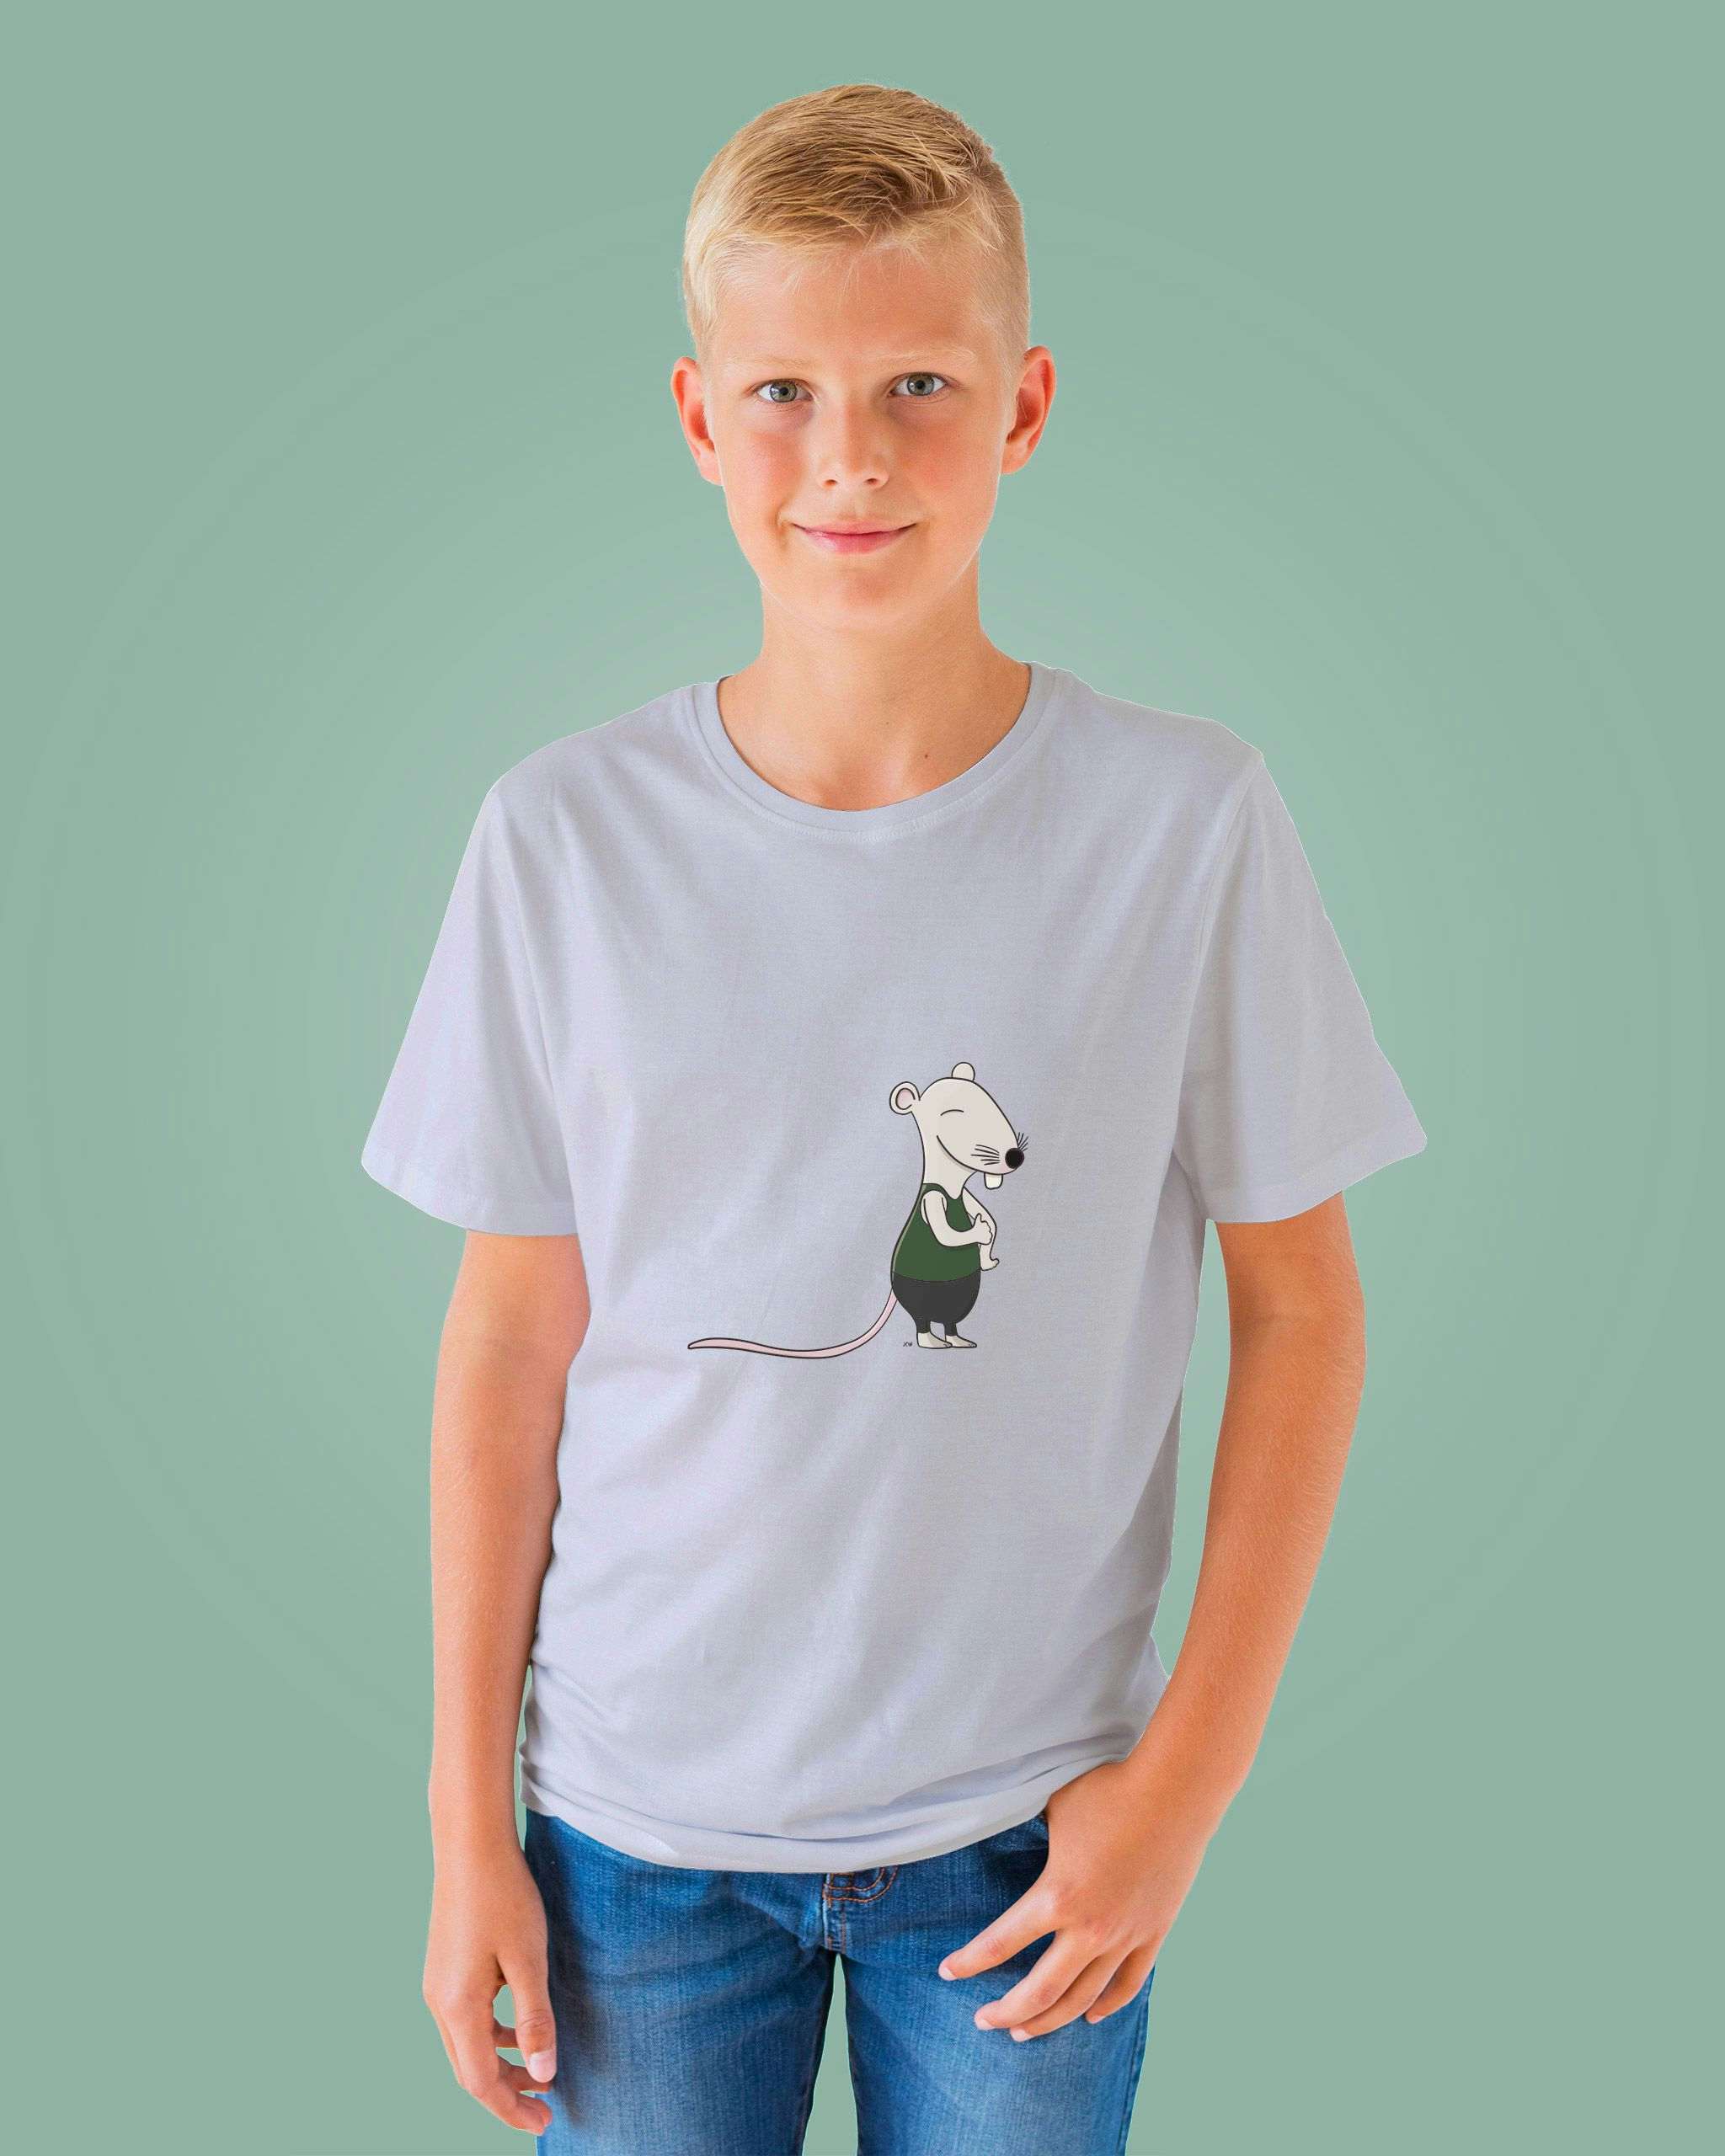 Funny cartoon rat character by Xavier Wendling. Boy t-shirt mockup.